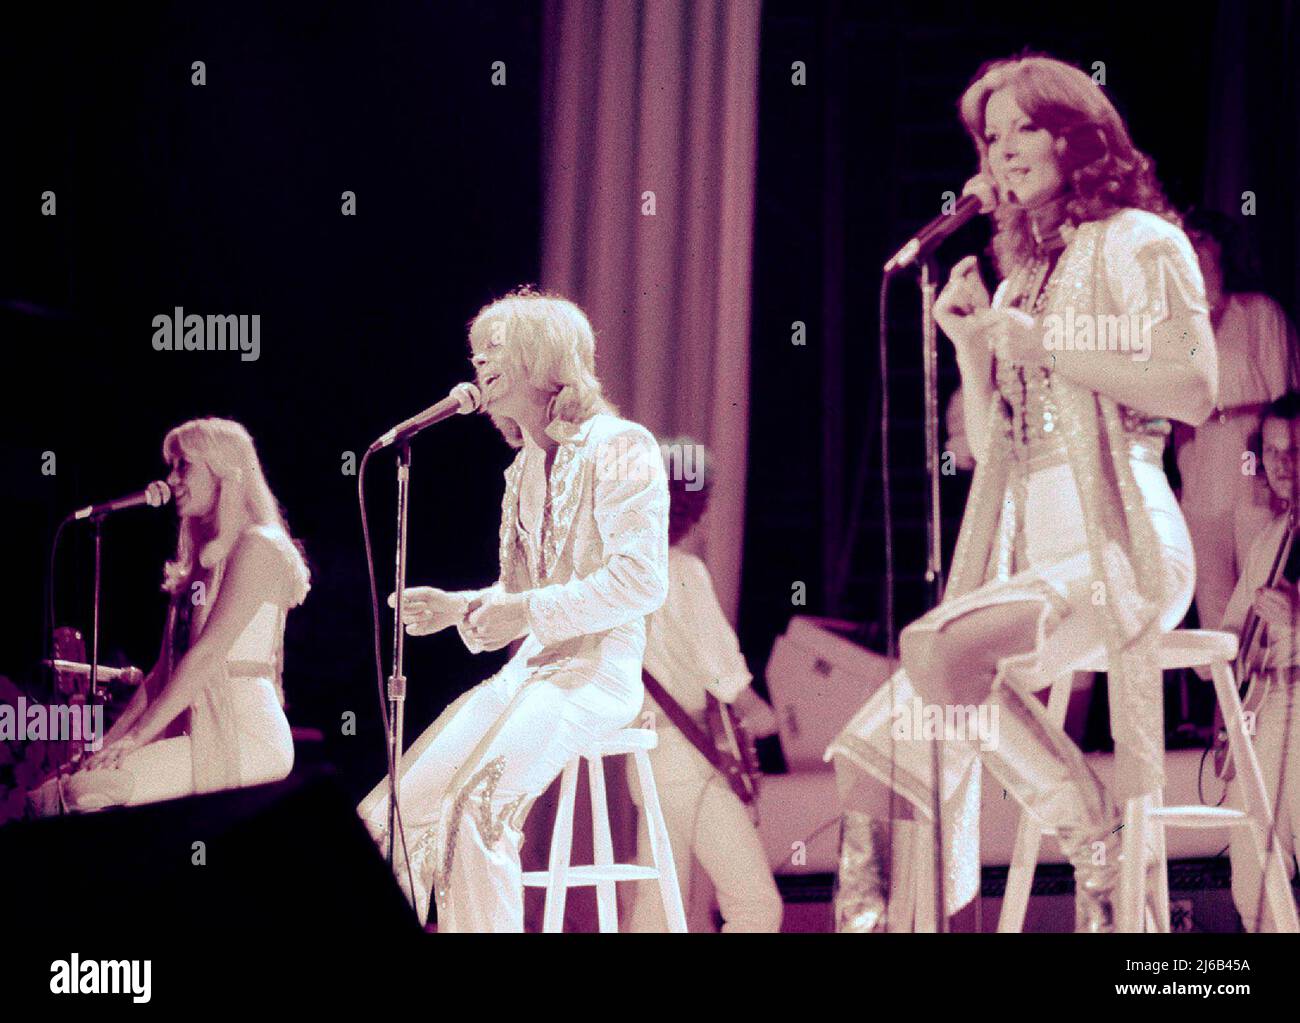 ABBA Royal Albert Hall Stockfotografie - Alamy